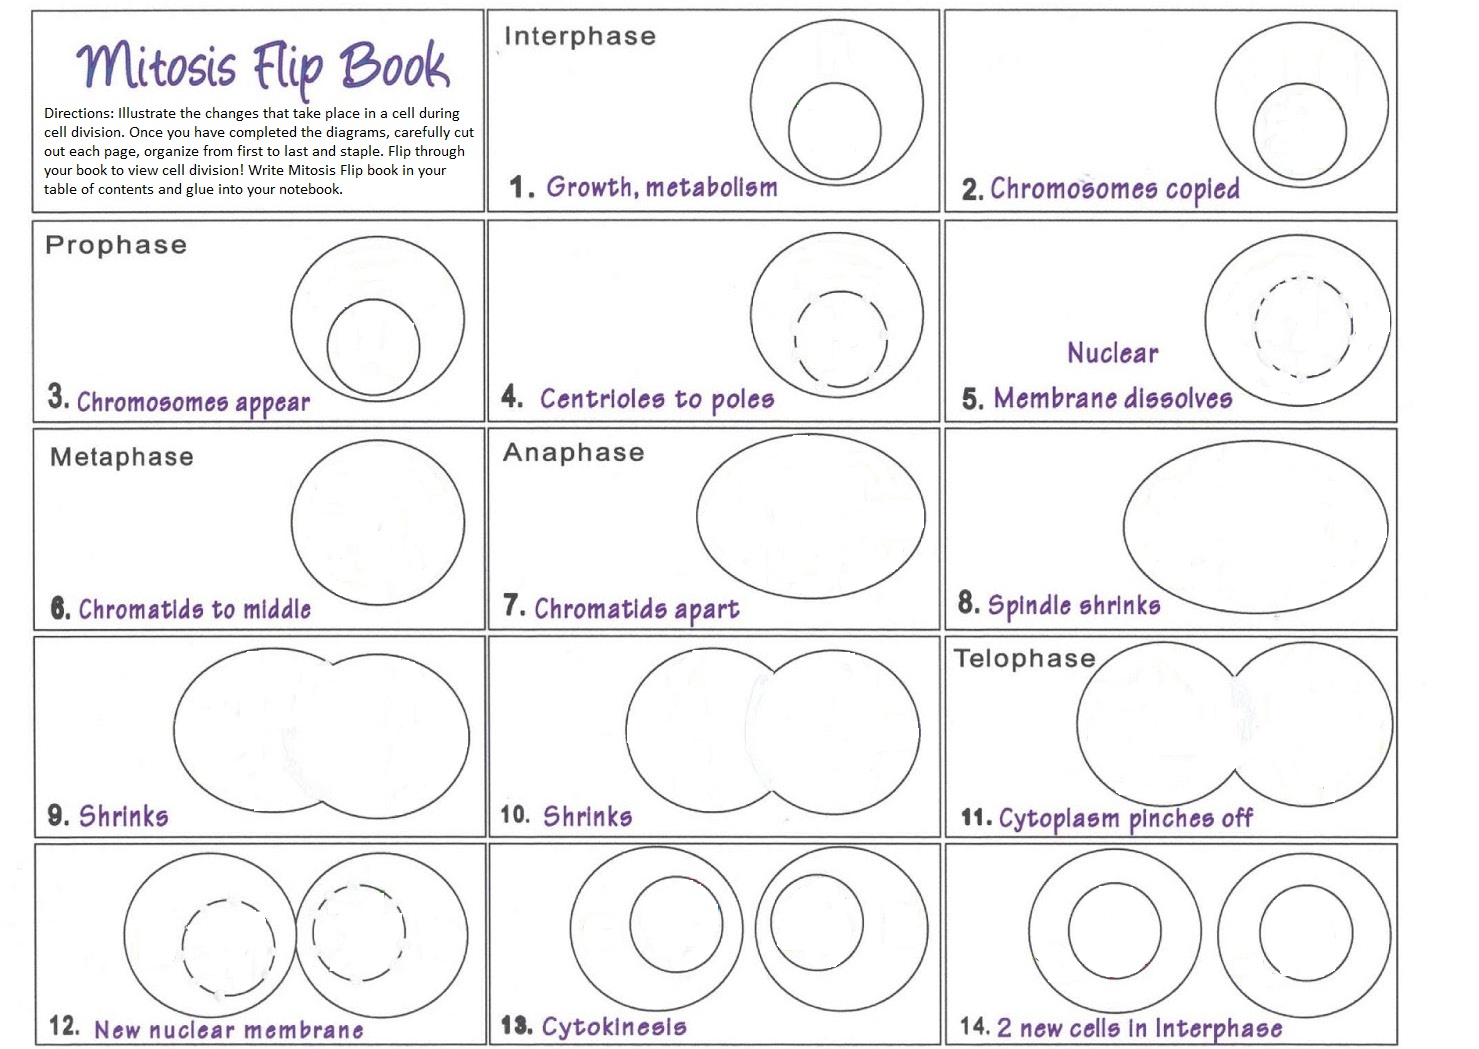 mitosis flip book activity